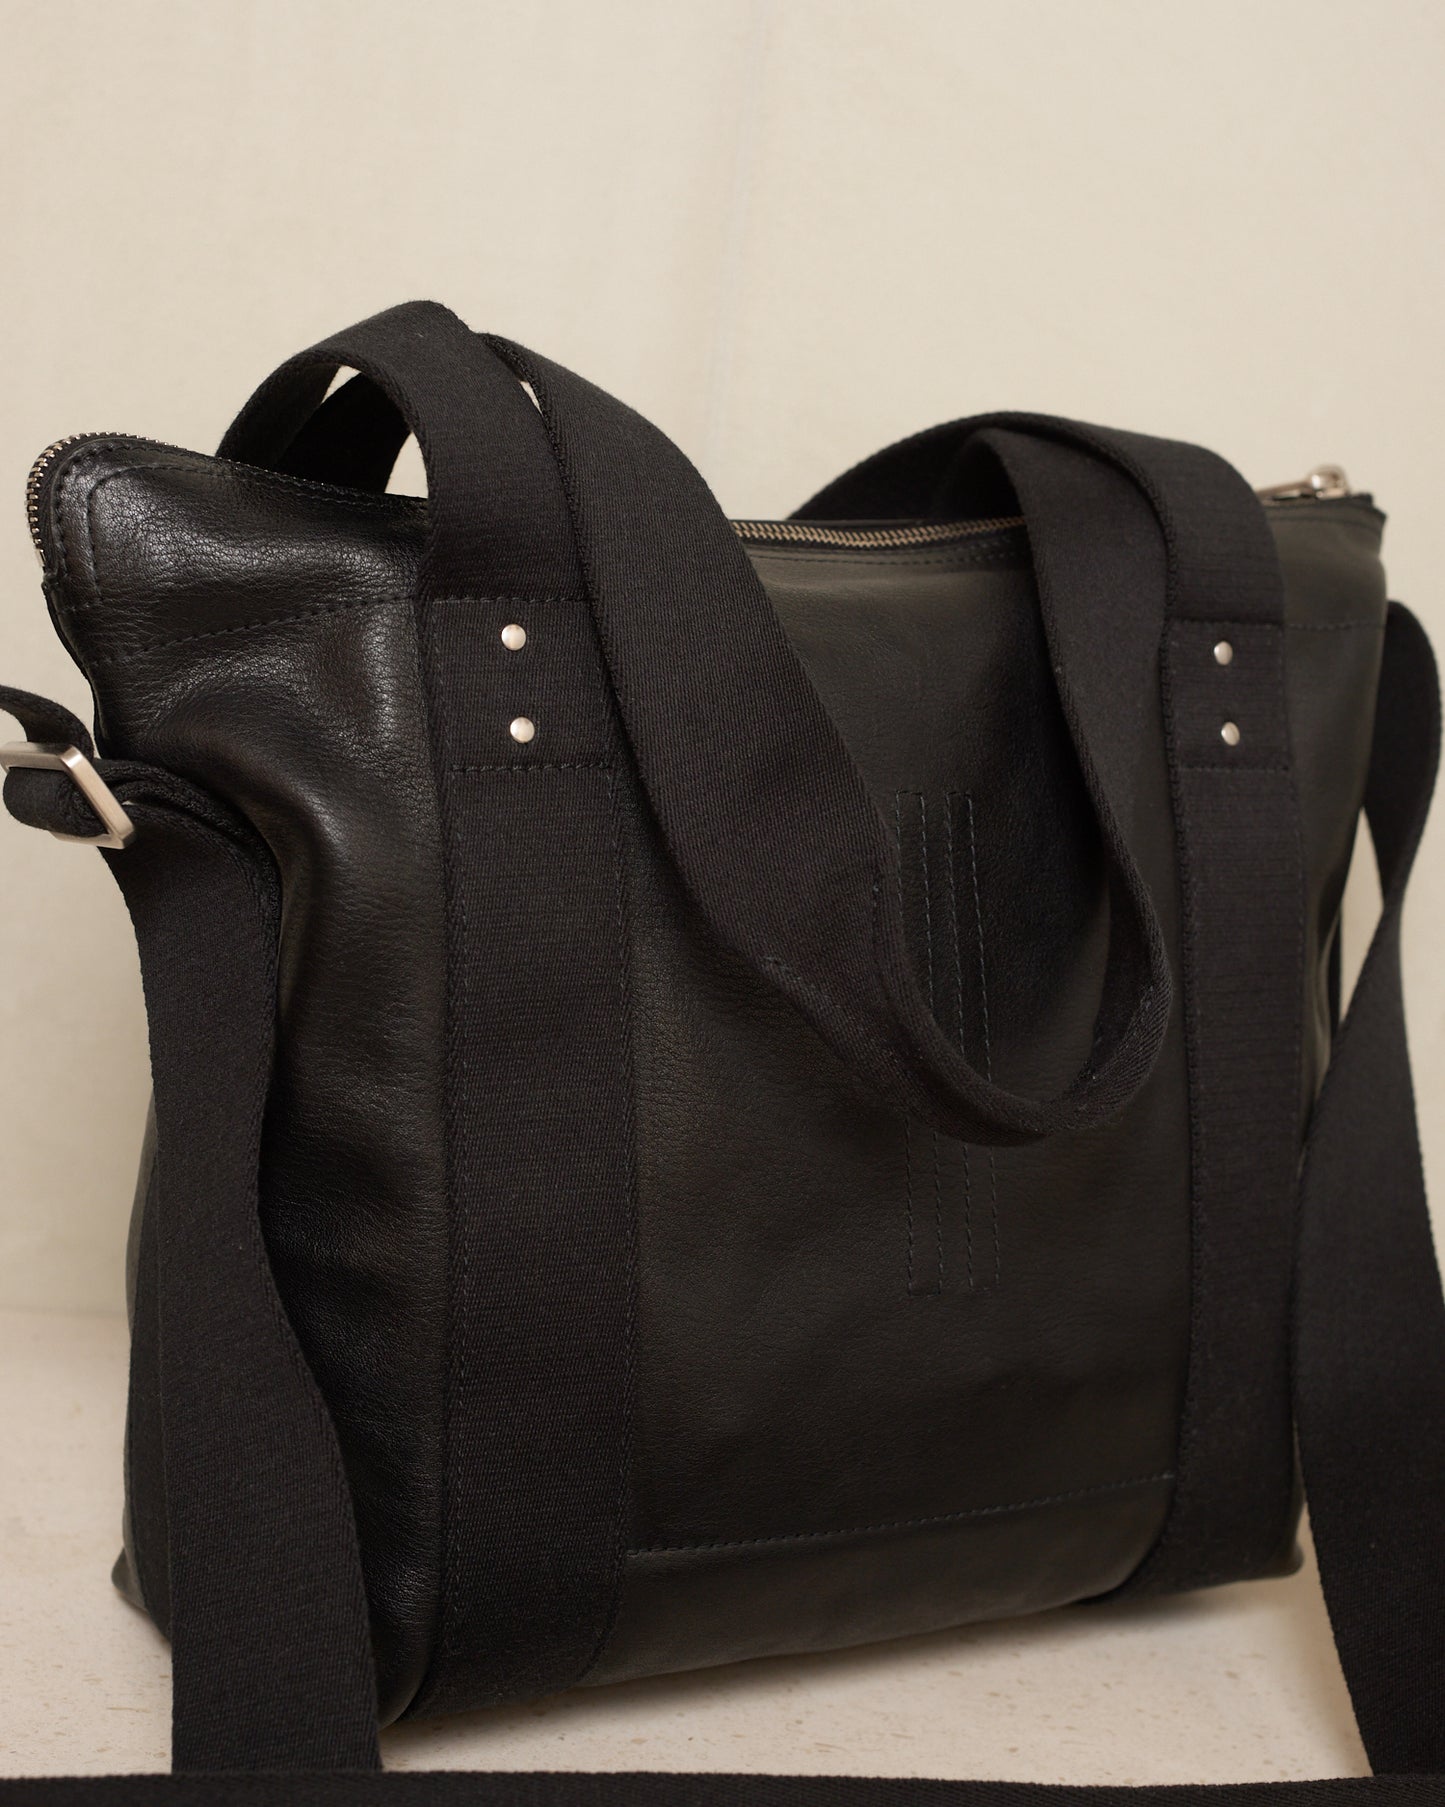 Black Contrast Stitch Leather Bag